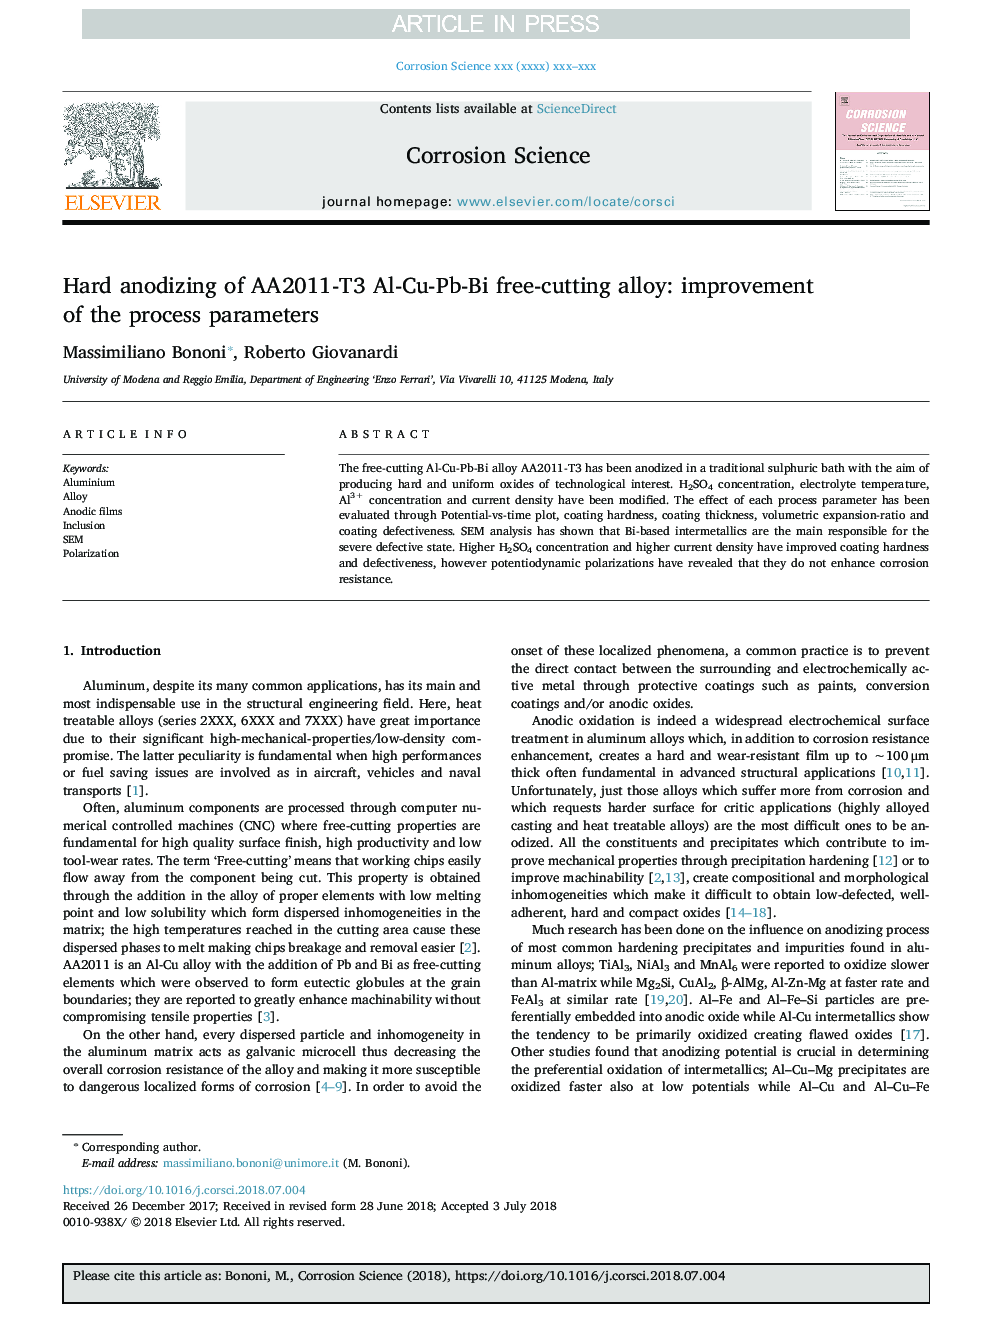 Hard anodizing of AA2011-T3 Al-Cu-Pb-Bi free-cutting alloy: improvement of the process parameters